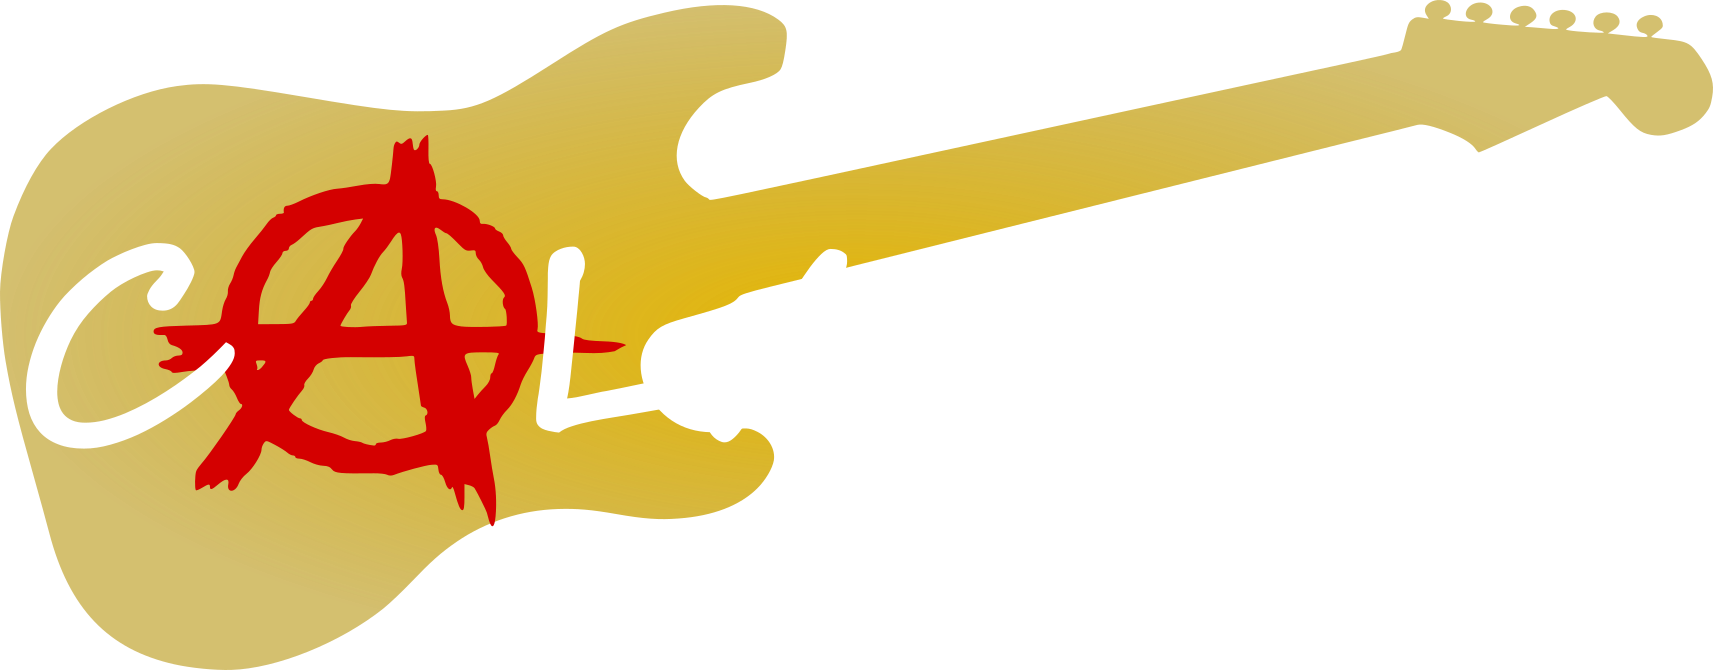 Calamity band logo